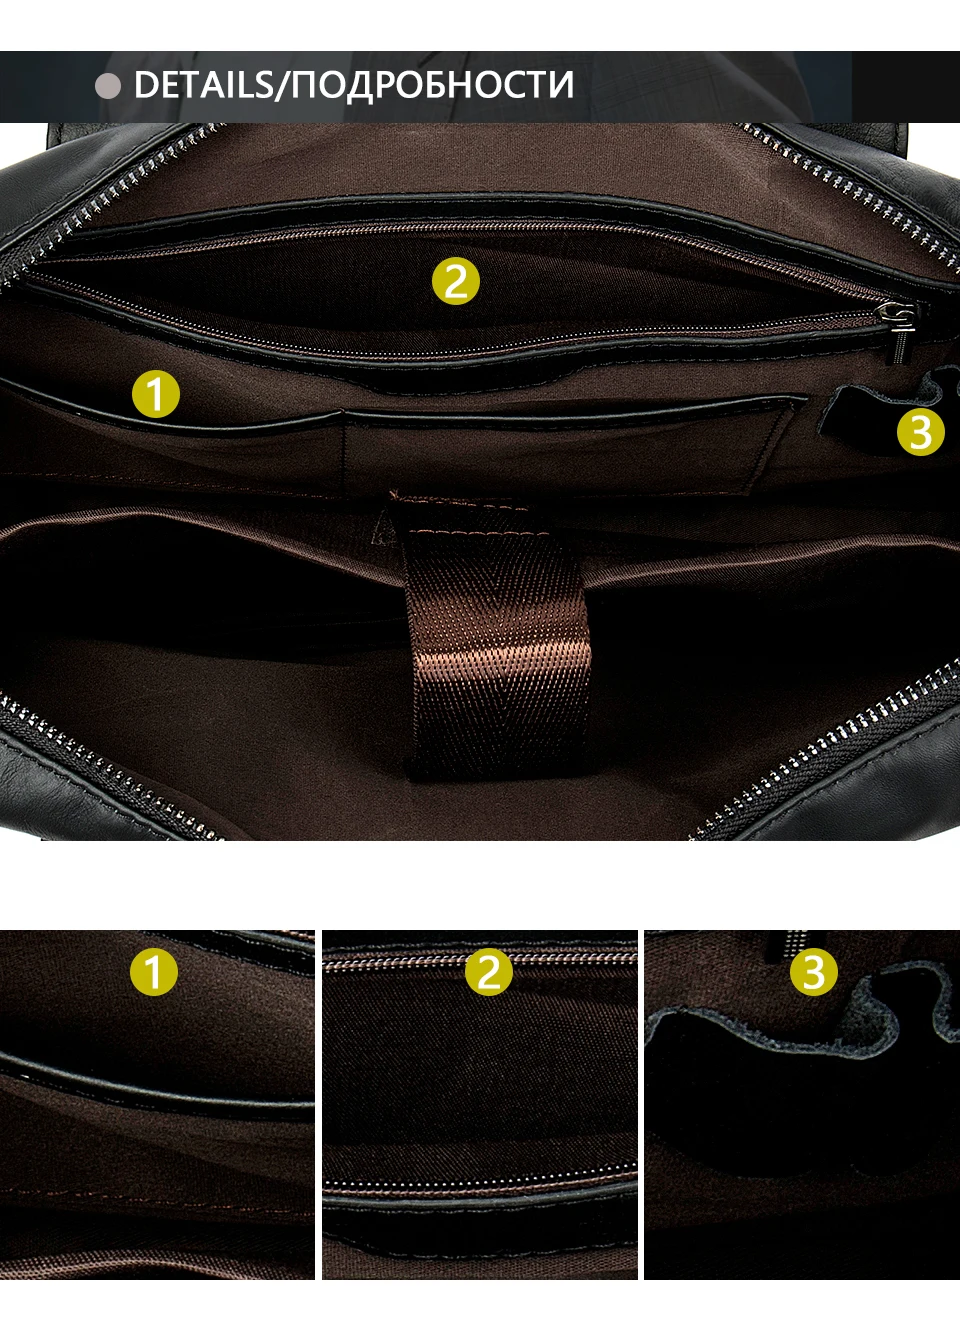 Сумки из кожи для Для Мужчин's Портфели бизнес сумки для ноутбуков документ Для мужчин ts компьютер Сумки сумка, портфель 9005